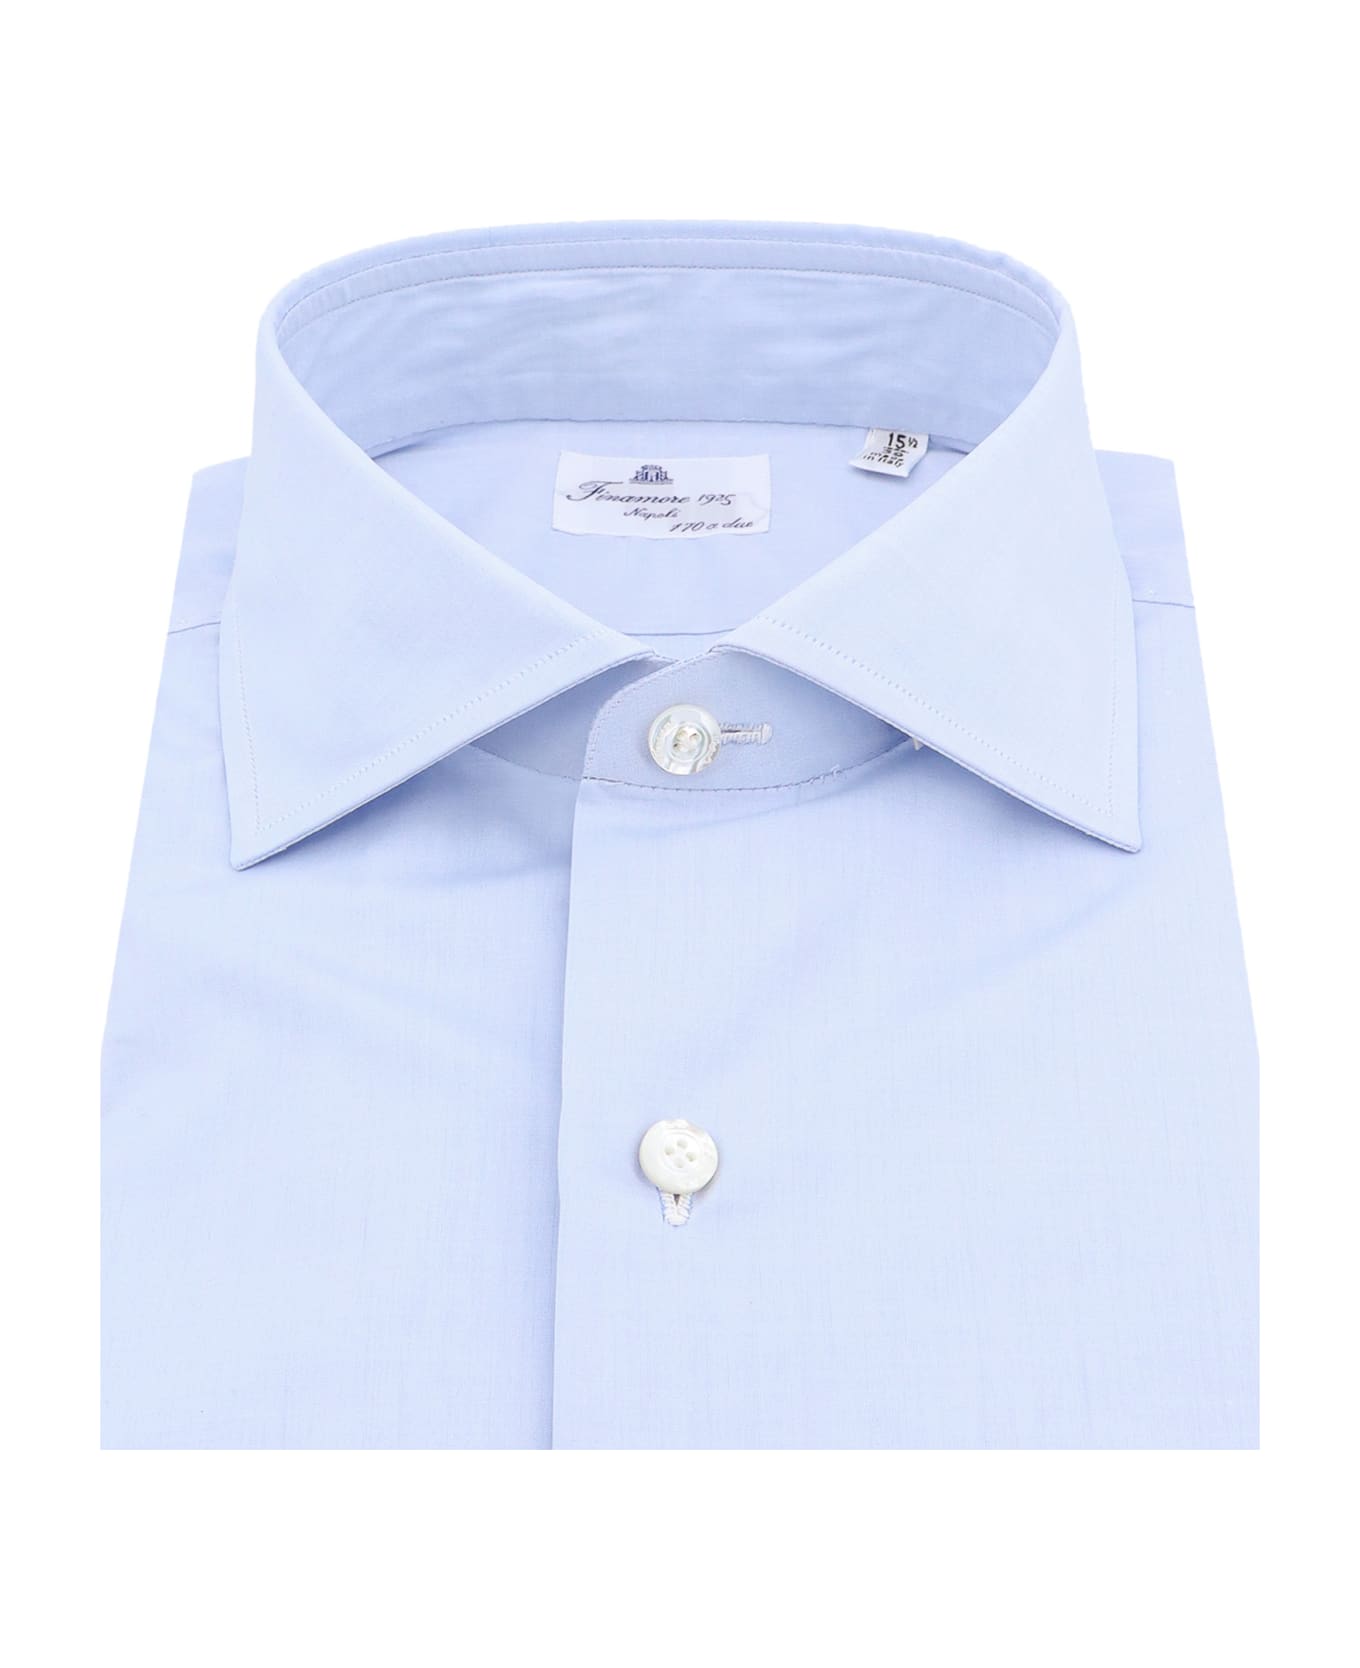 Finamore Shirt - Blue